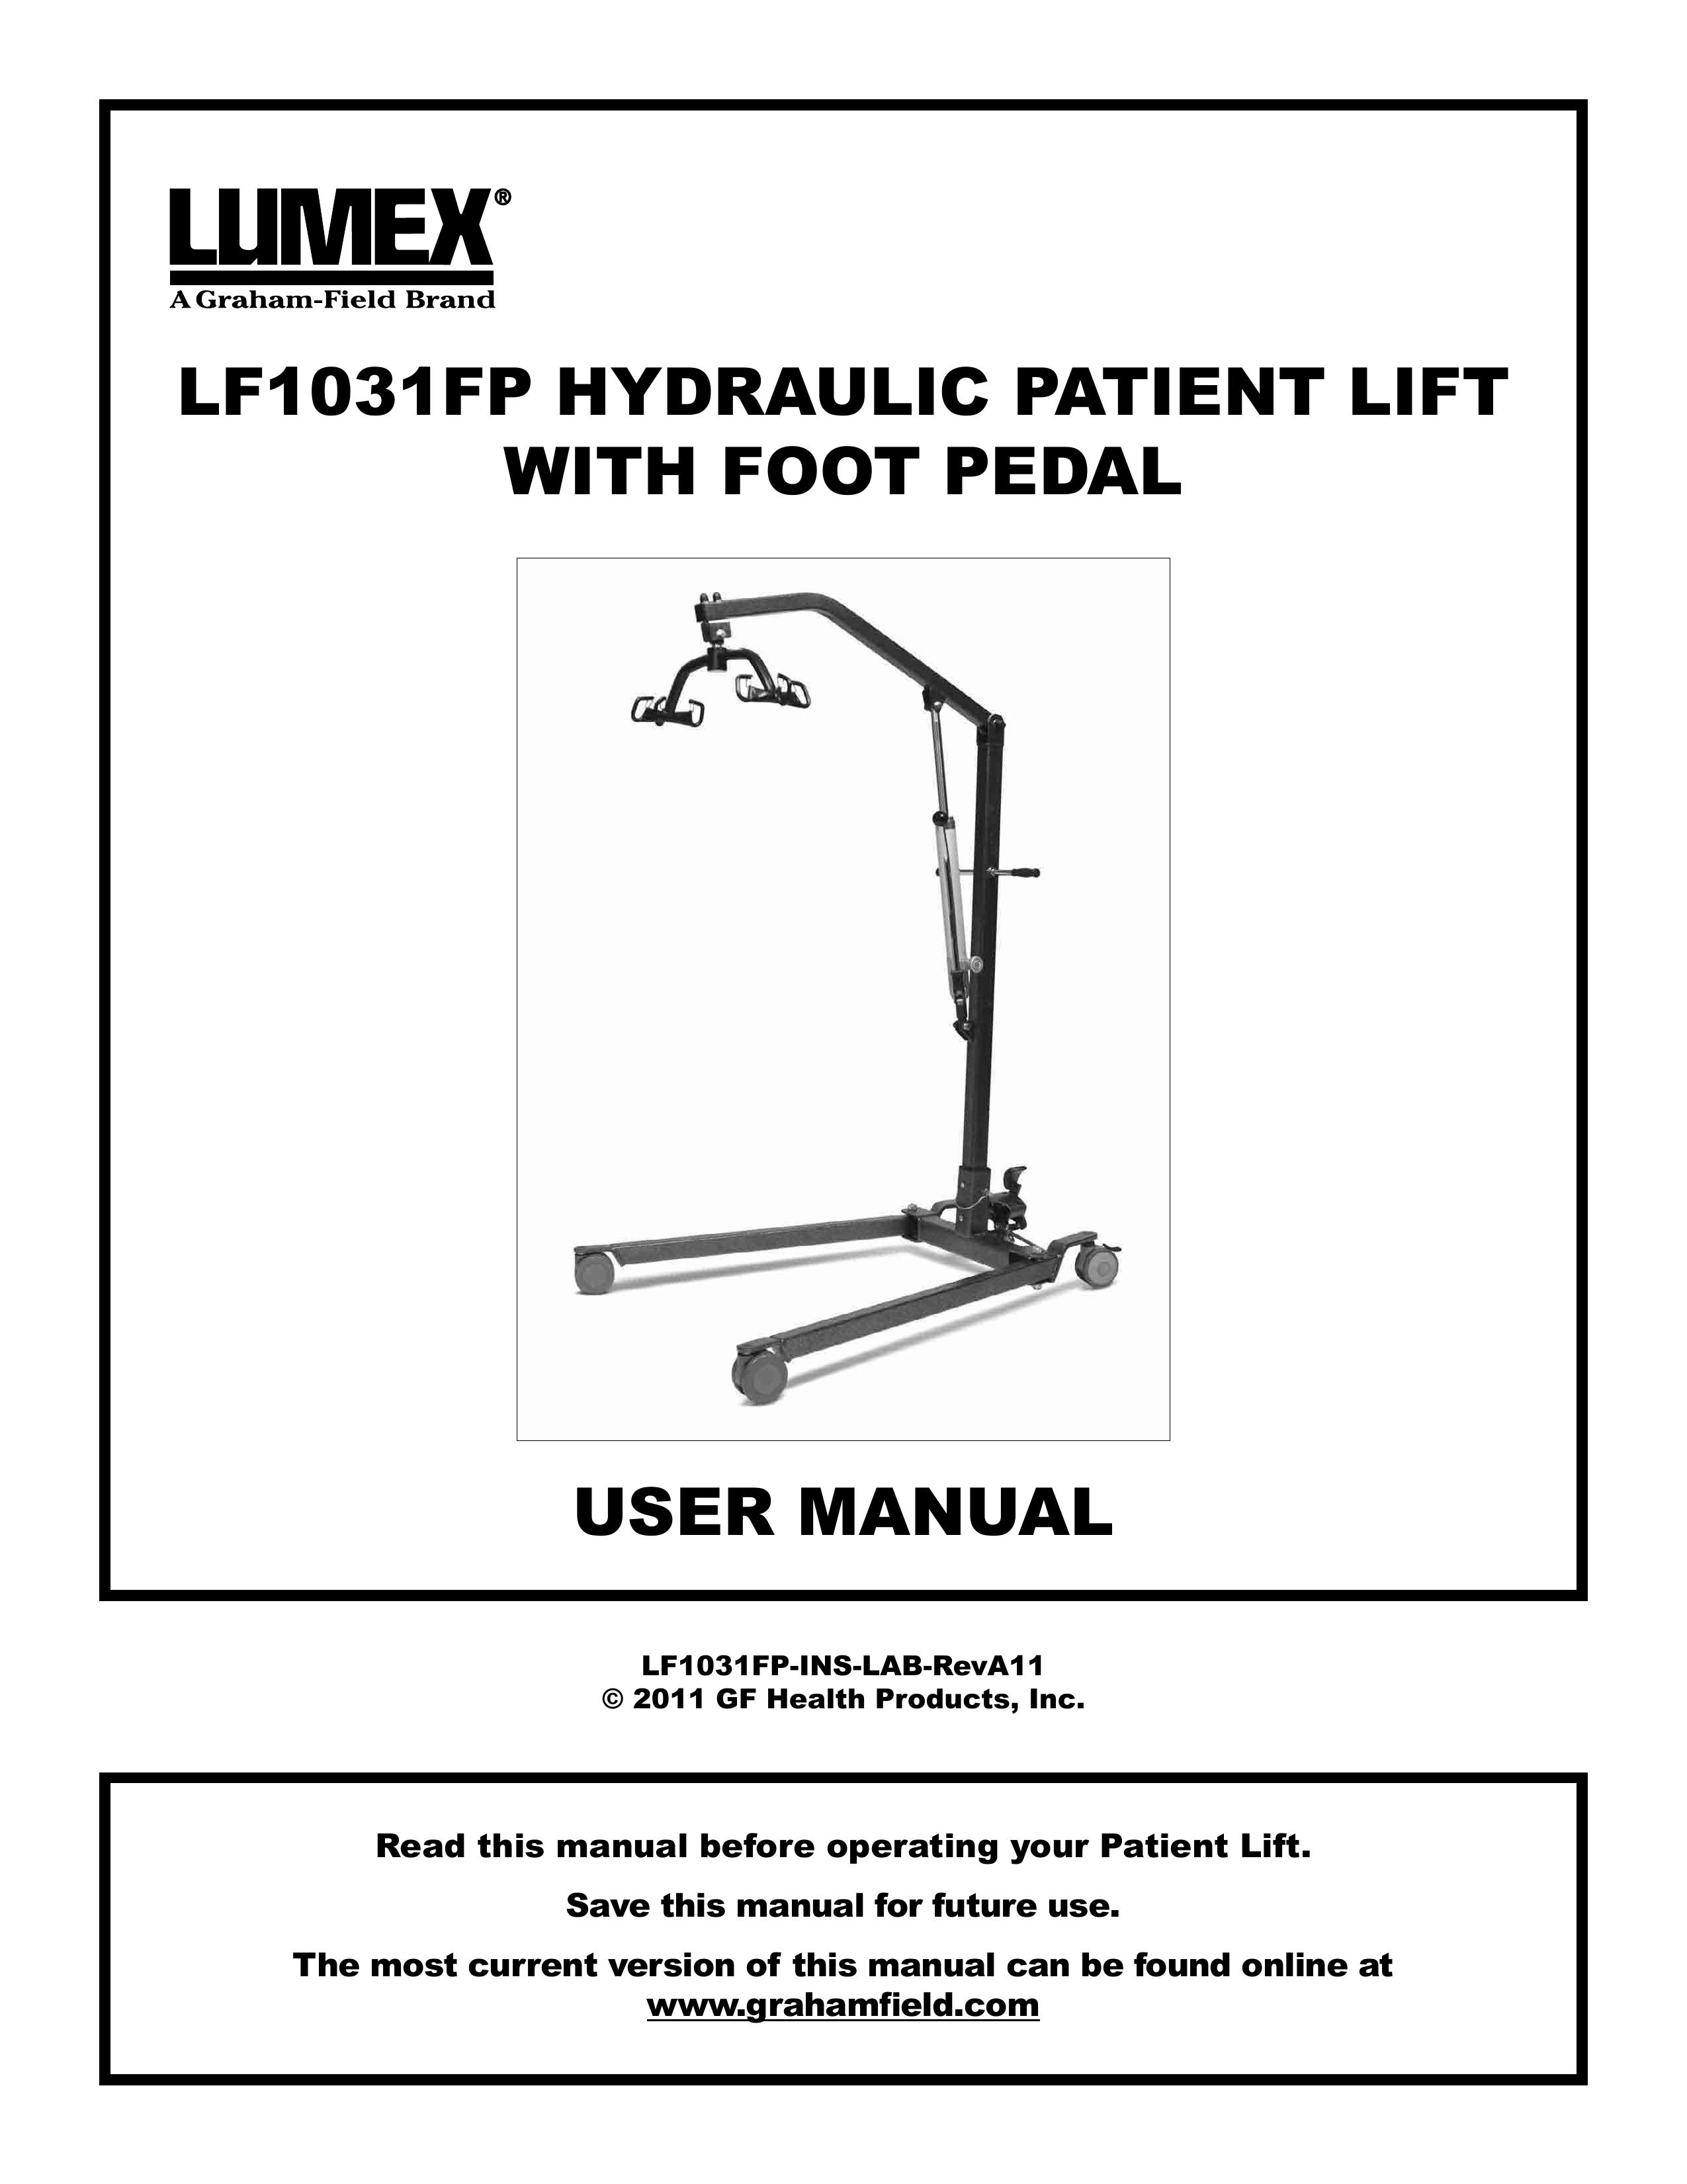 Graham Field LF1031FP Personal Lift User Manual